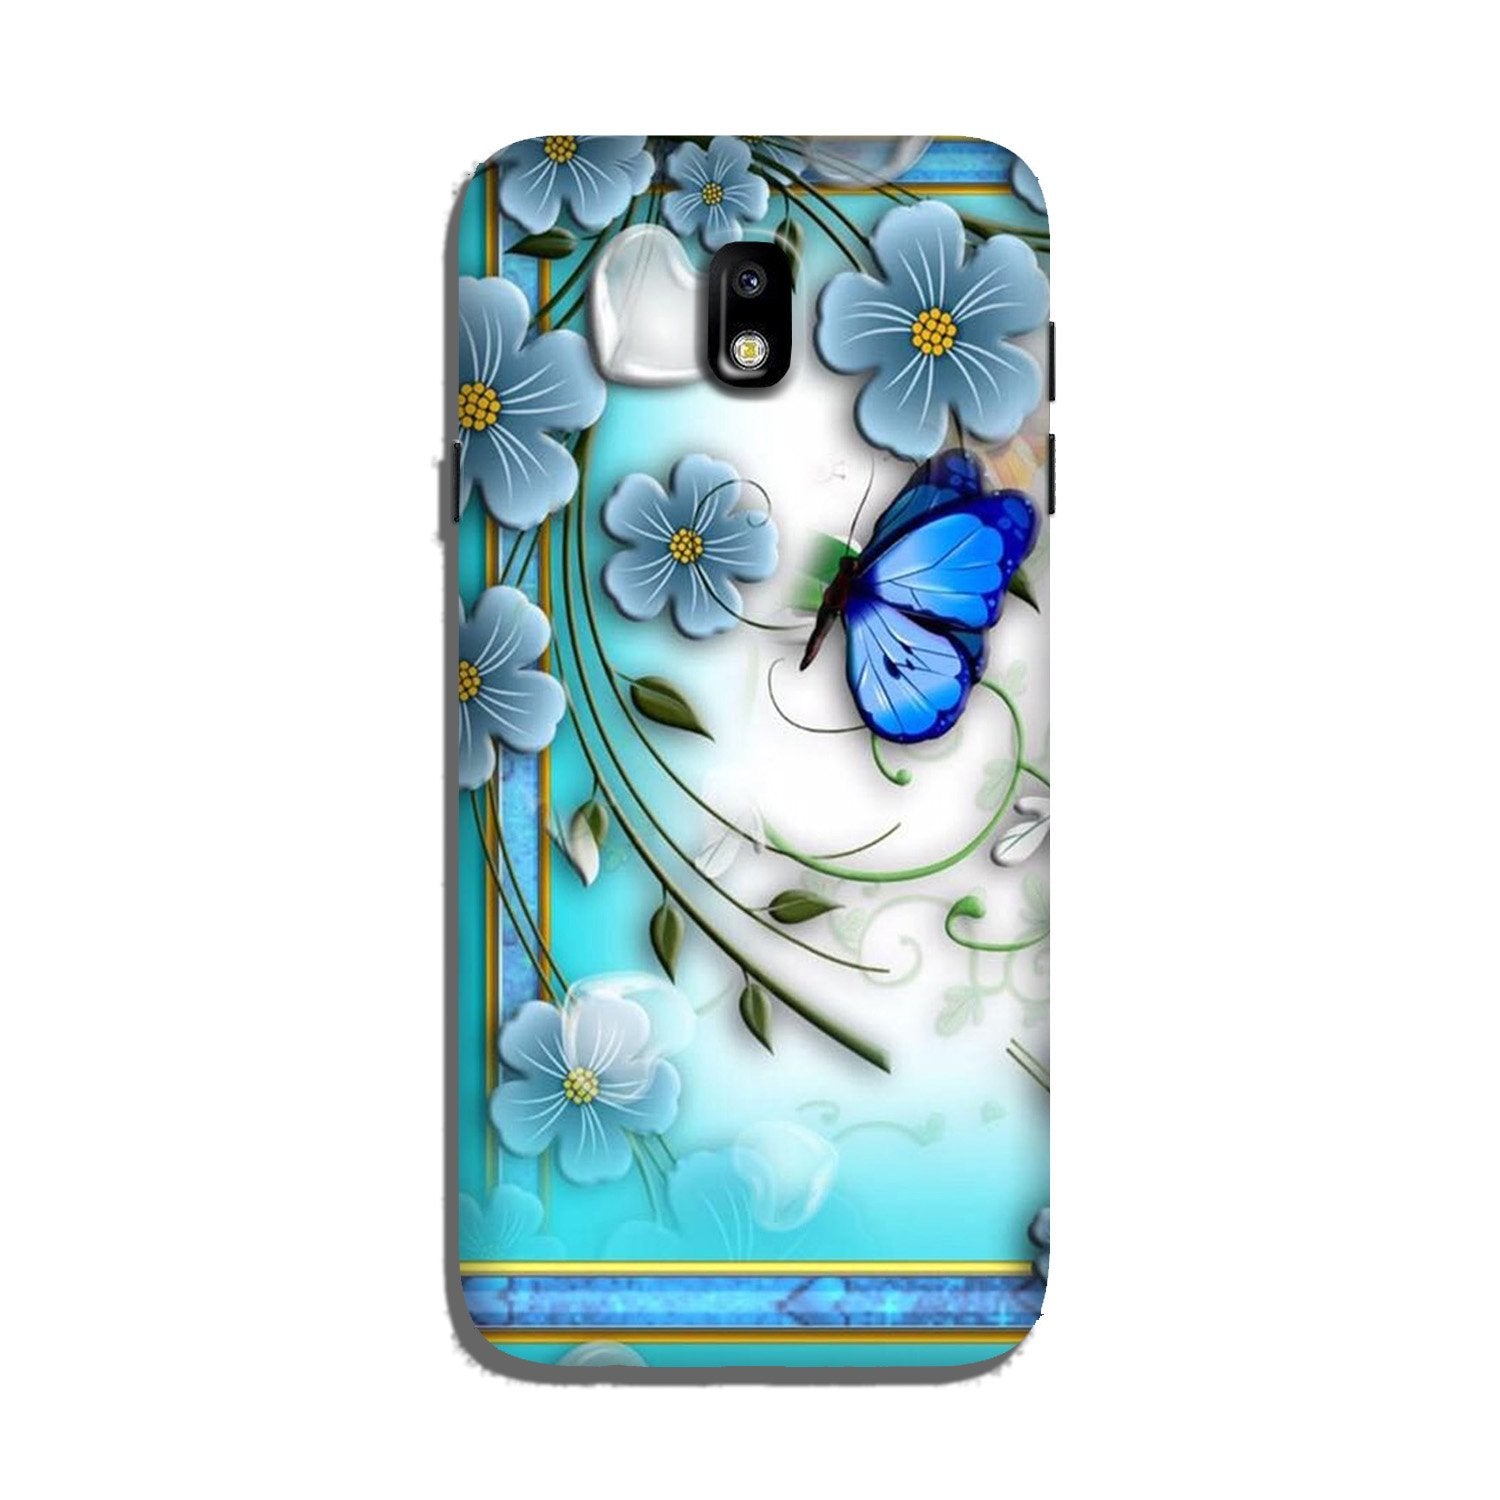 Blue Butterfly Case for Galaxy J3 Pro